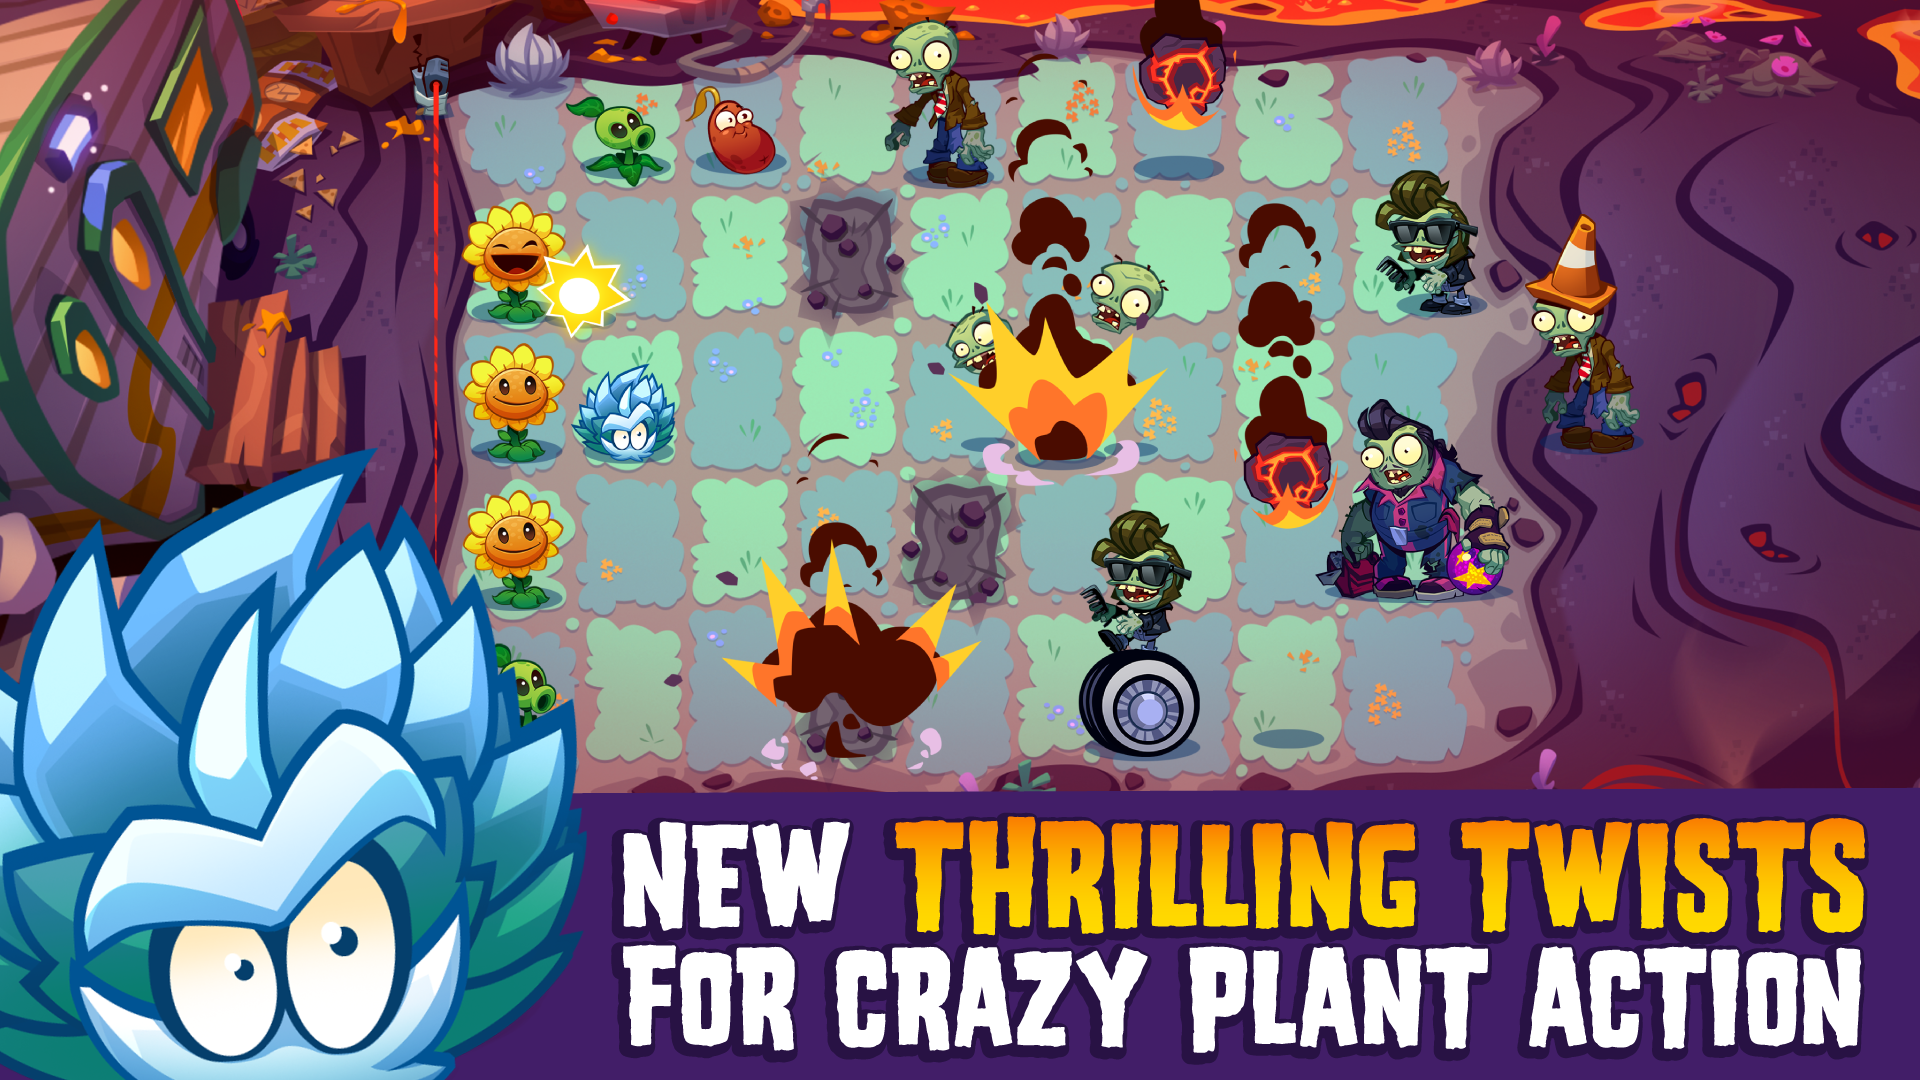 Trying Plants Vs Zombies 3! (PvZ 3 Beta) 